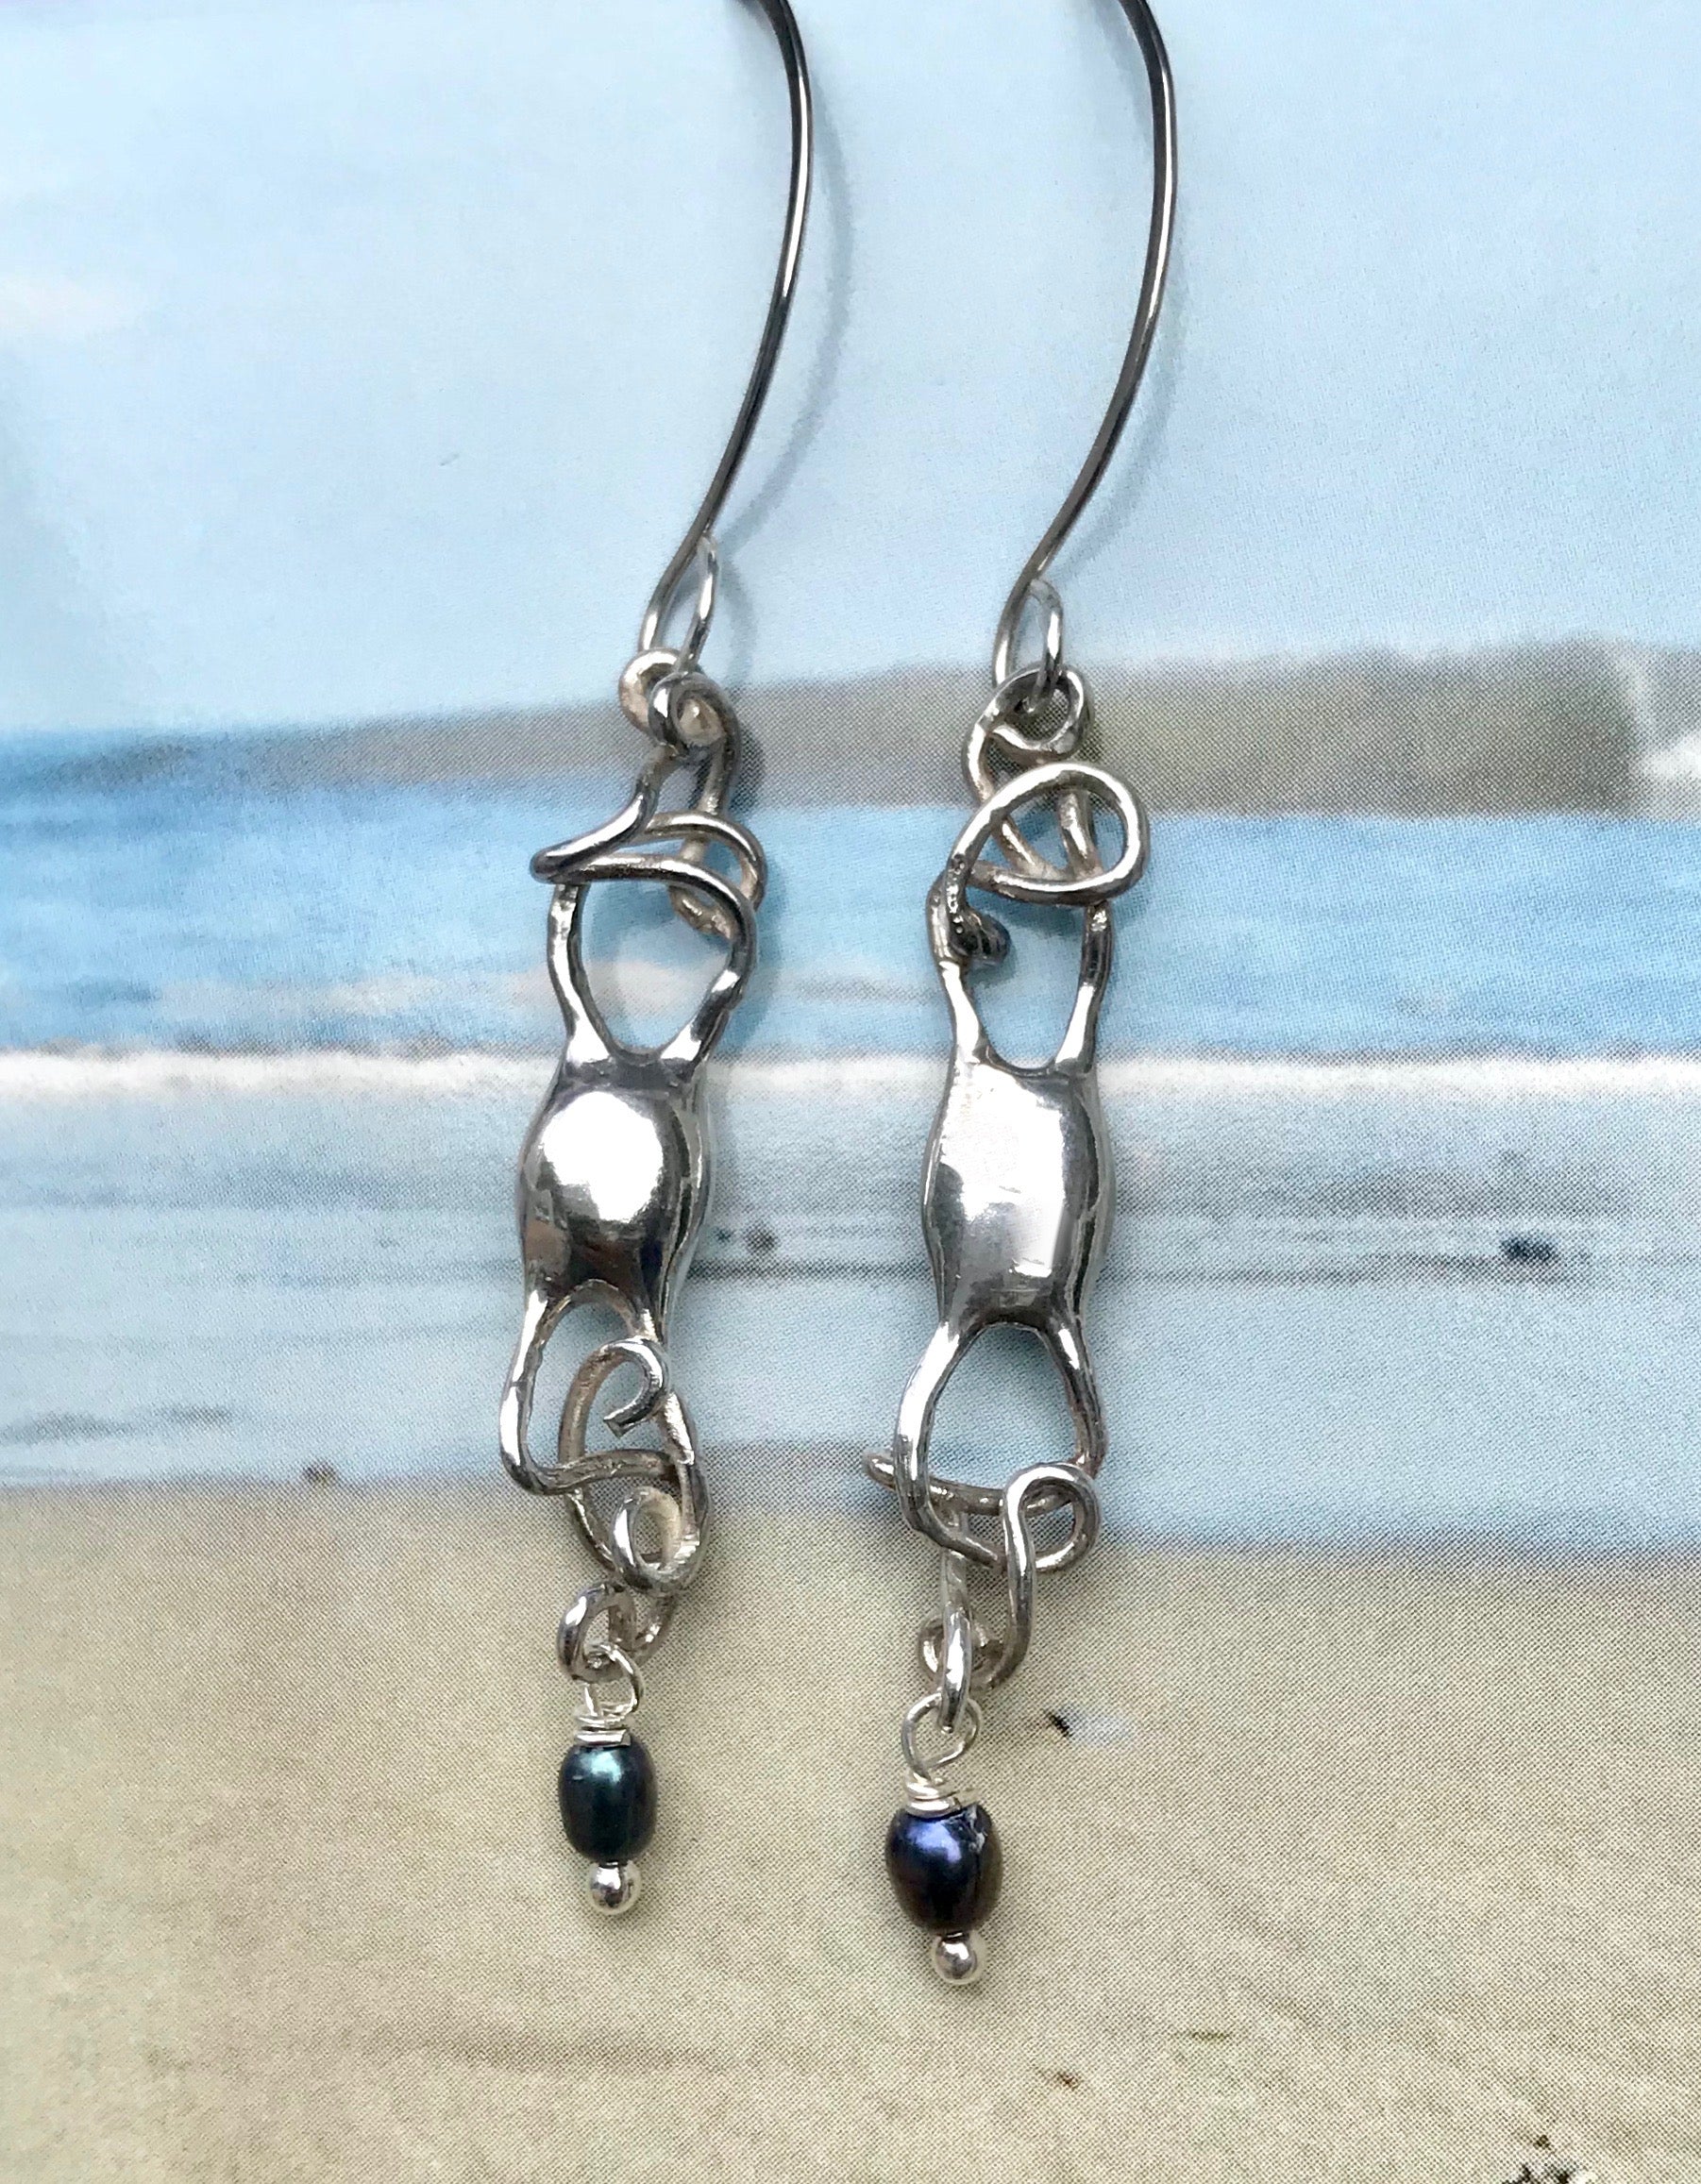 Mermaid's purse silver earrings with black pearl